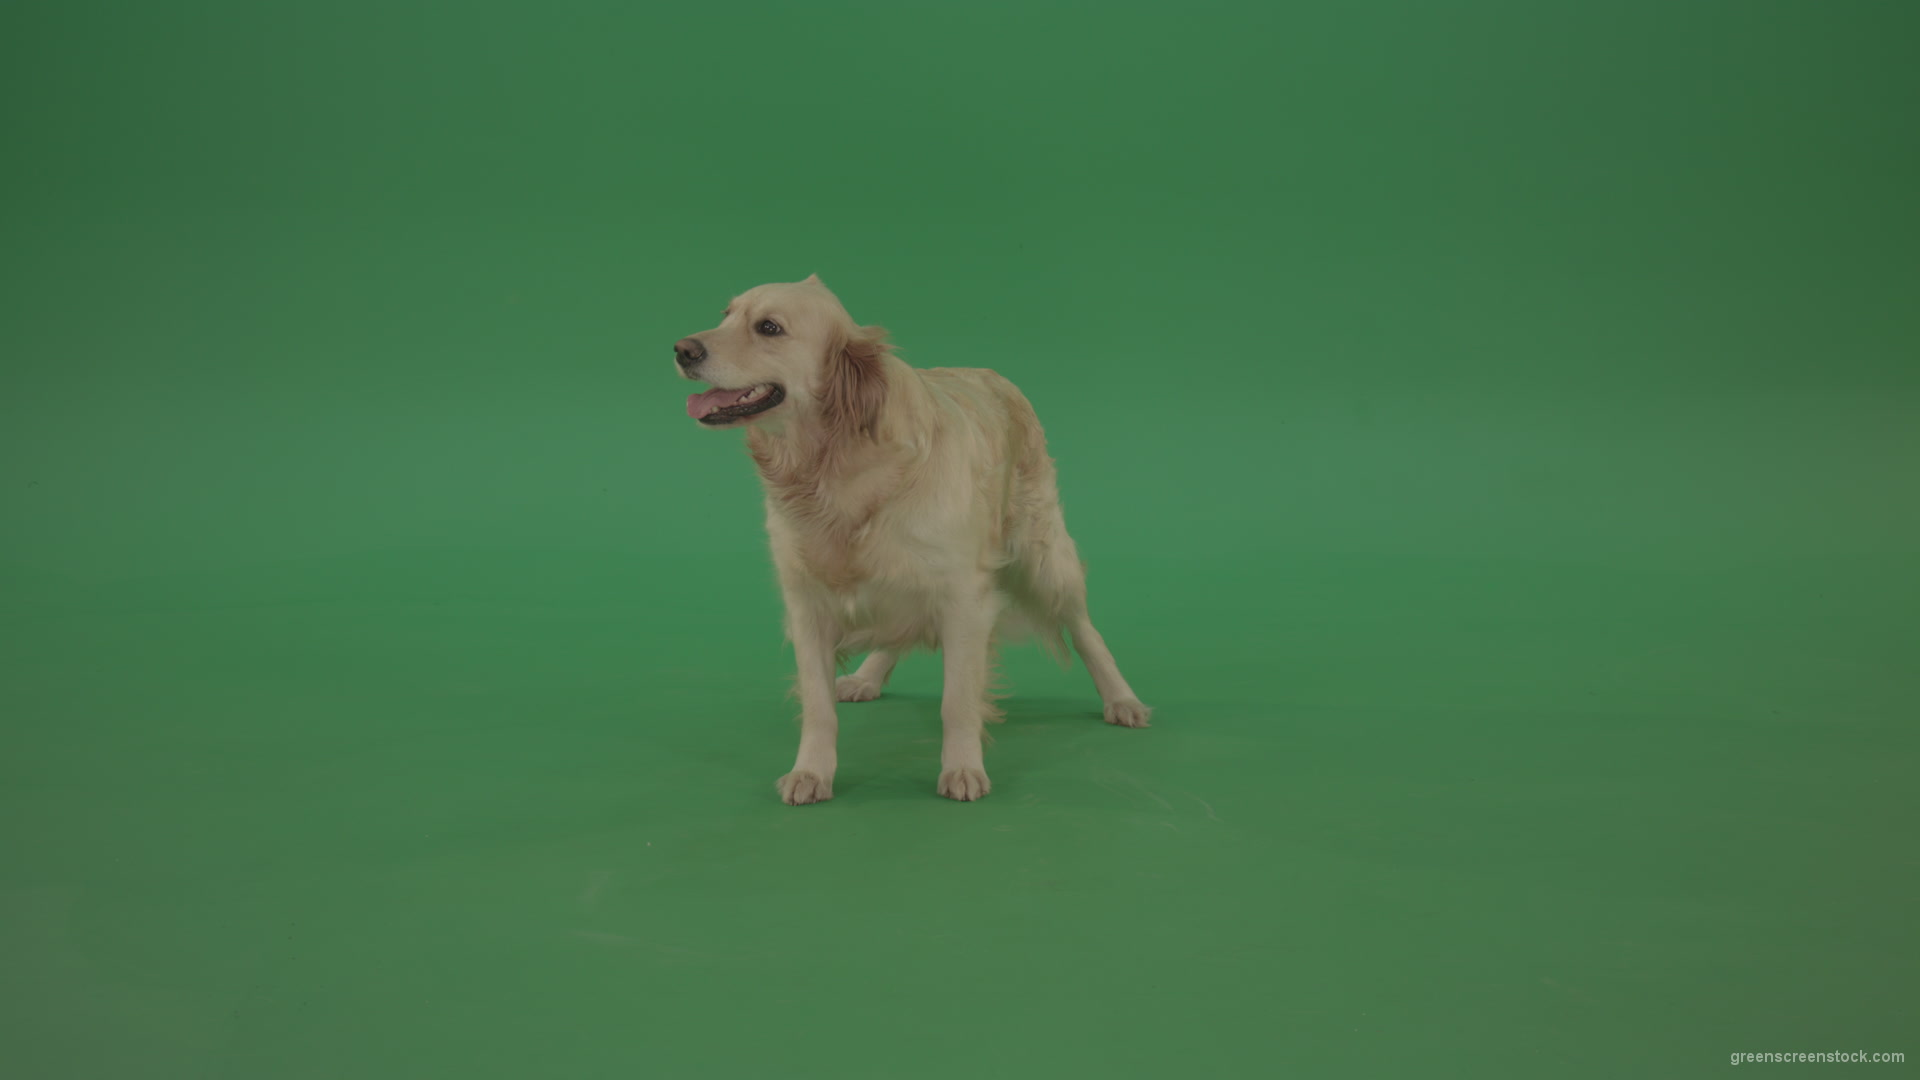 Golden-Retriever-Gun-Dog-Bird-Dog-stand-isolated-in-green-screen-studio_009 Green Screen Stock